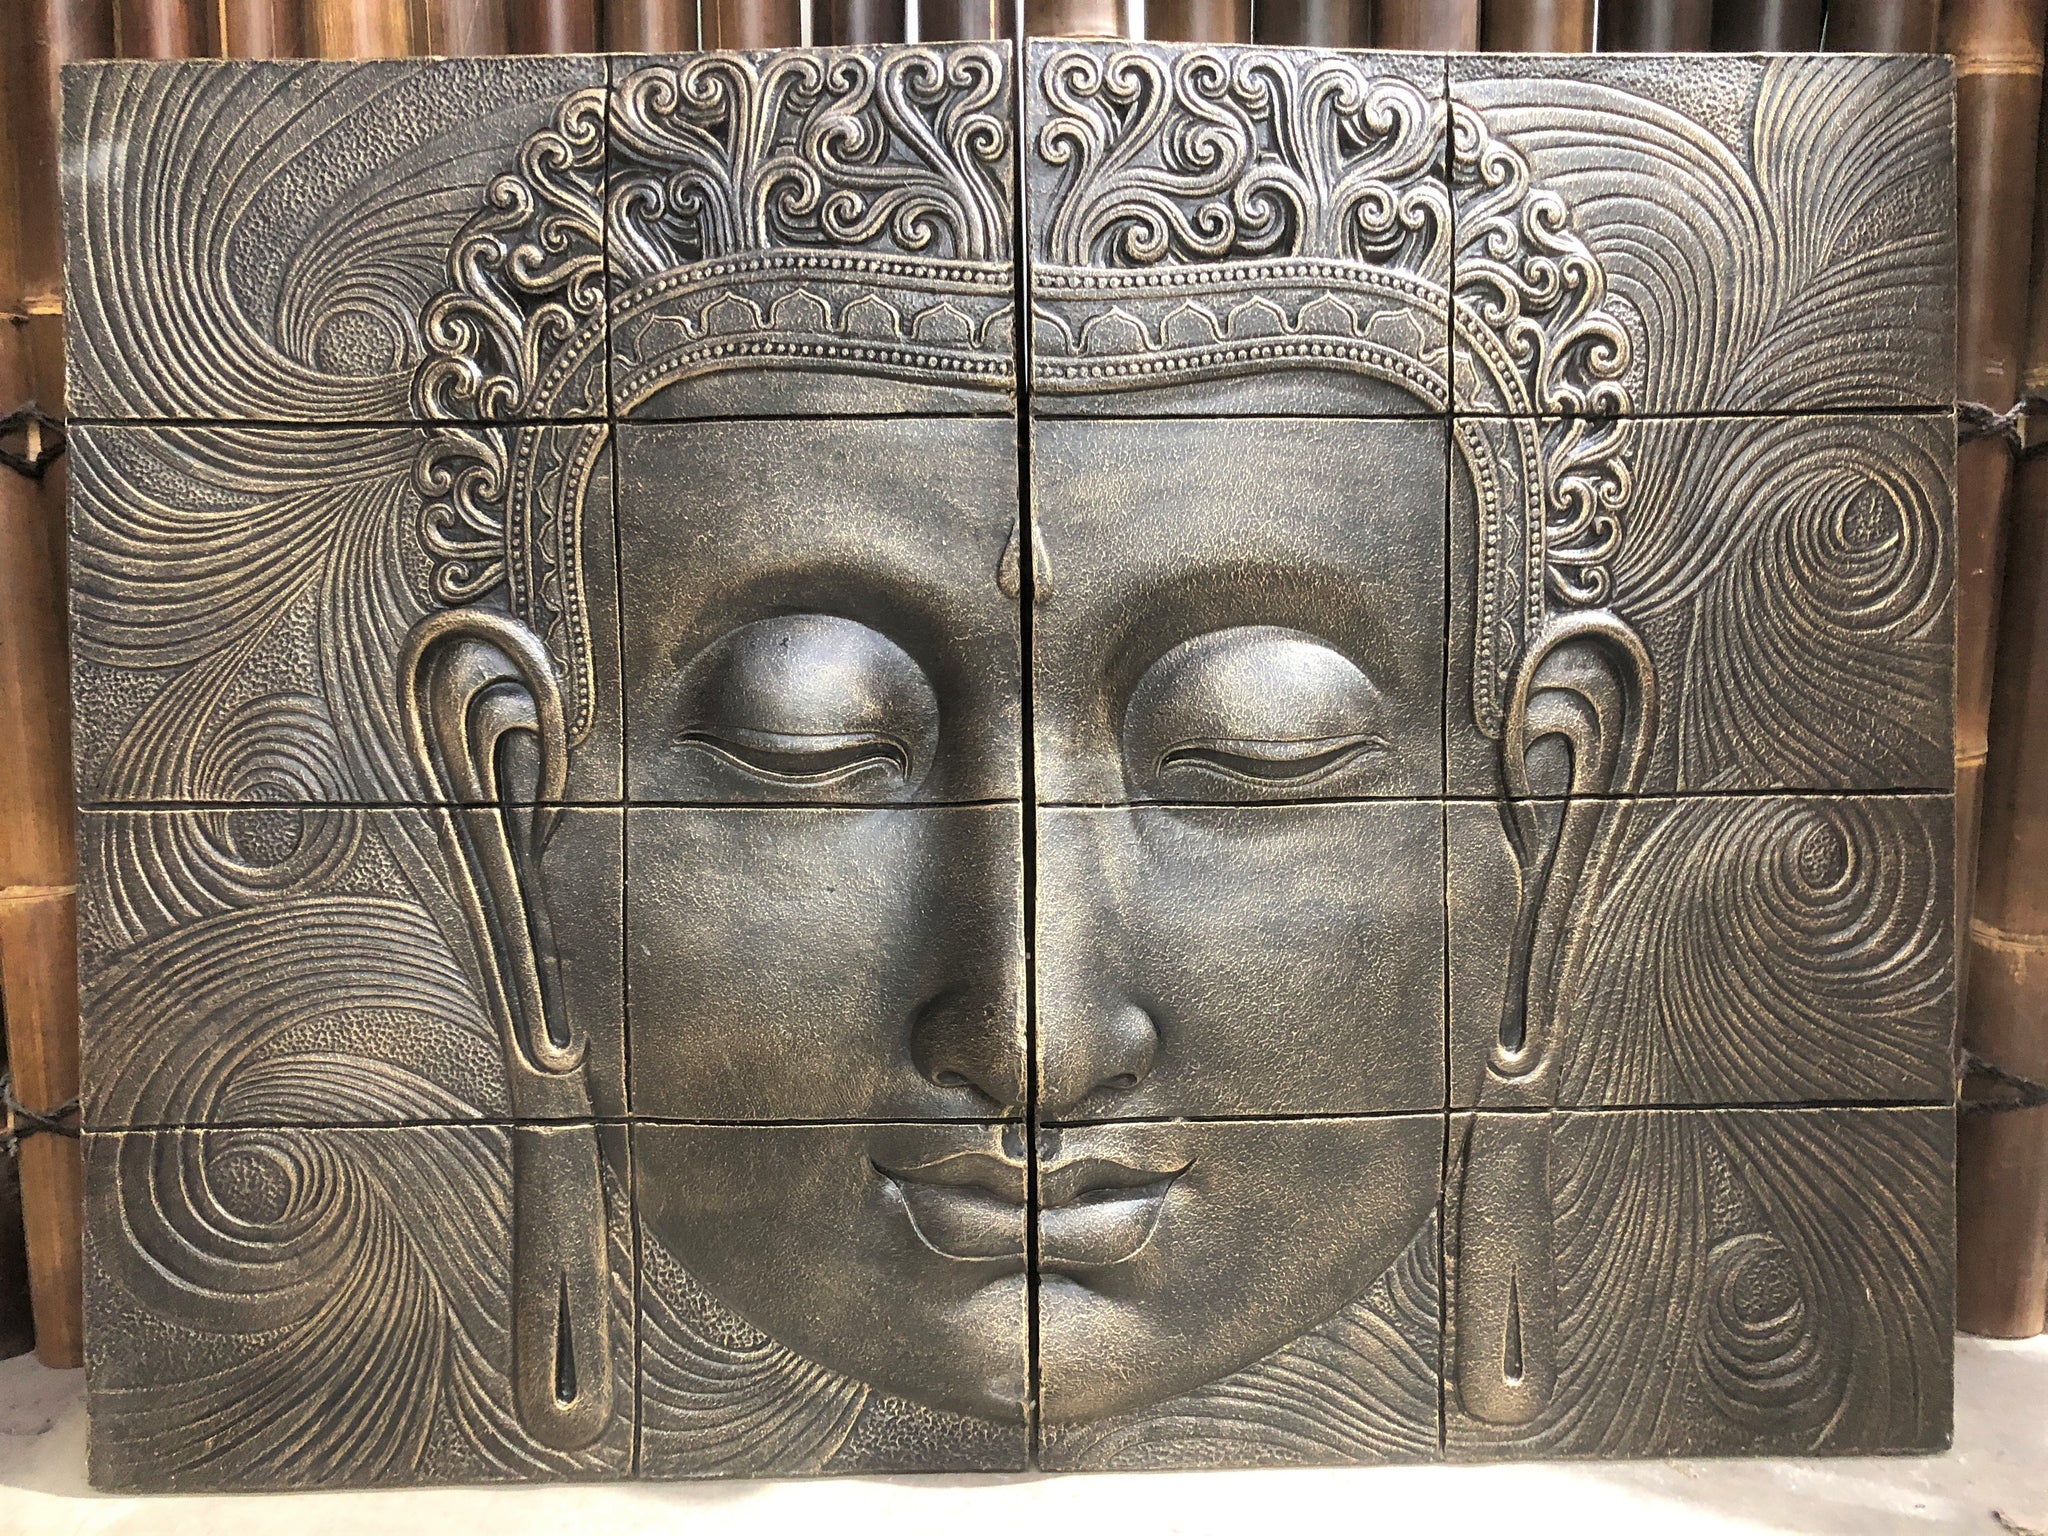 2 Piece Buddha Face wall Plaque #10082 – Bali Mystique